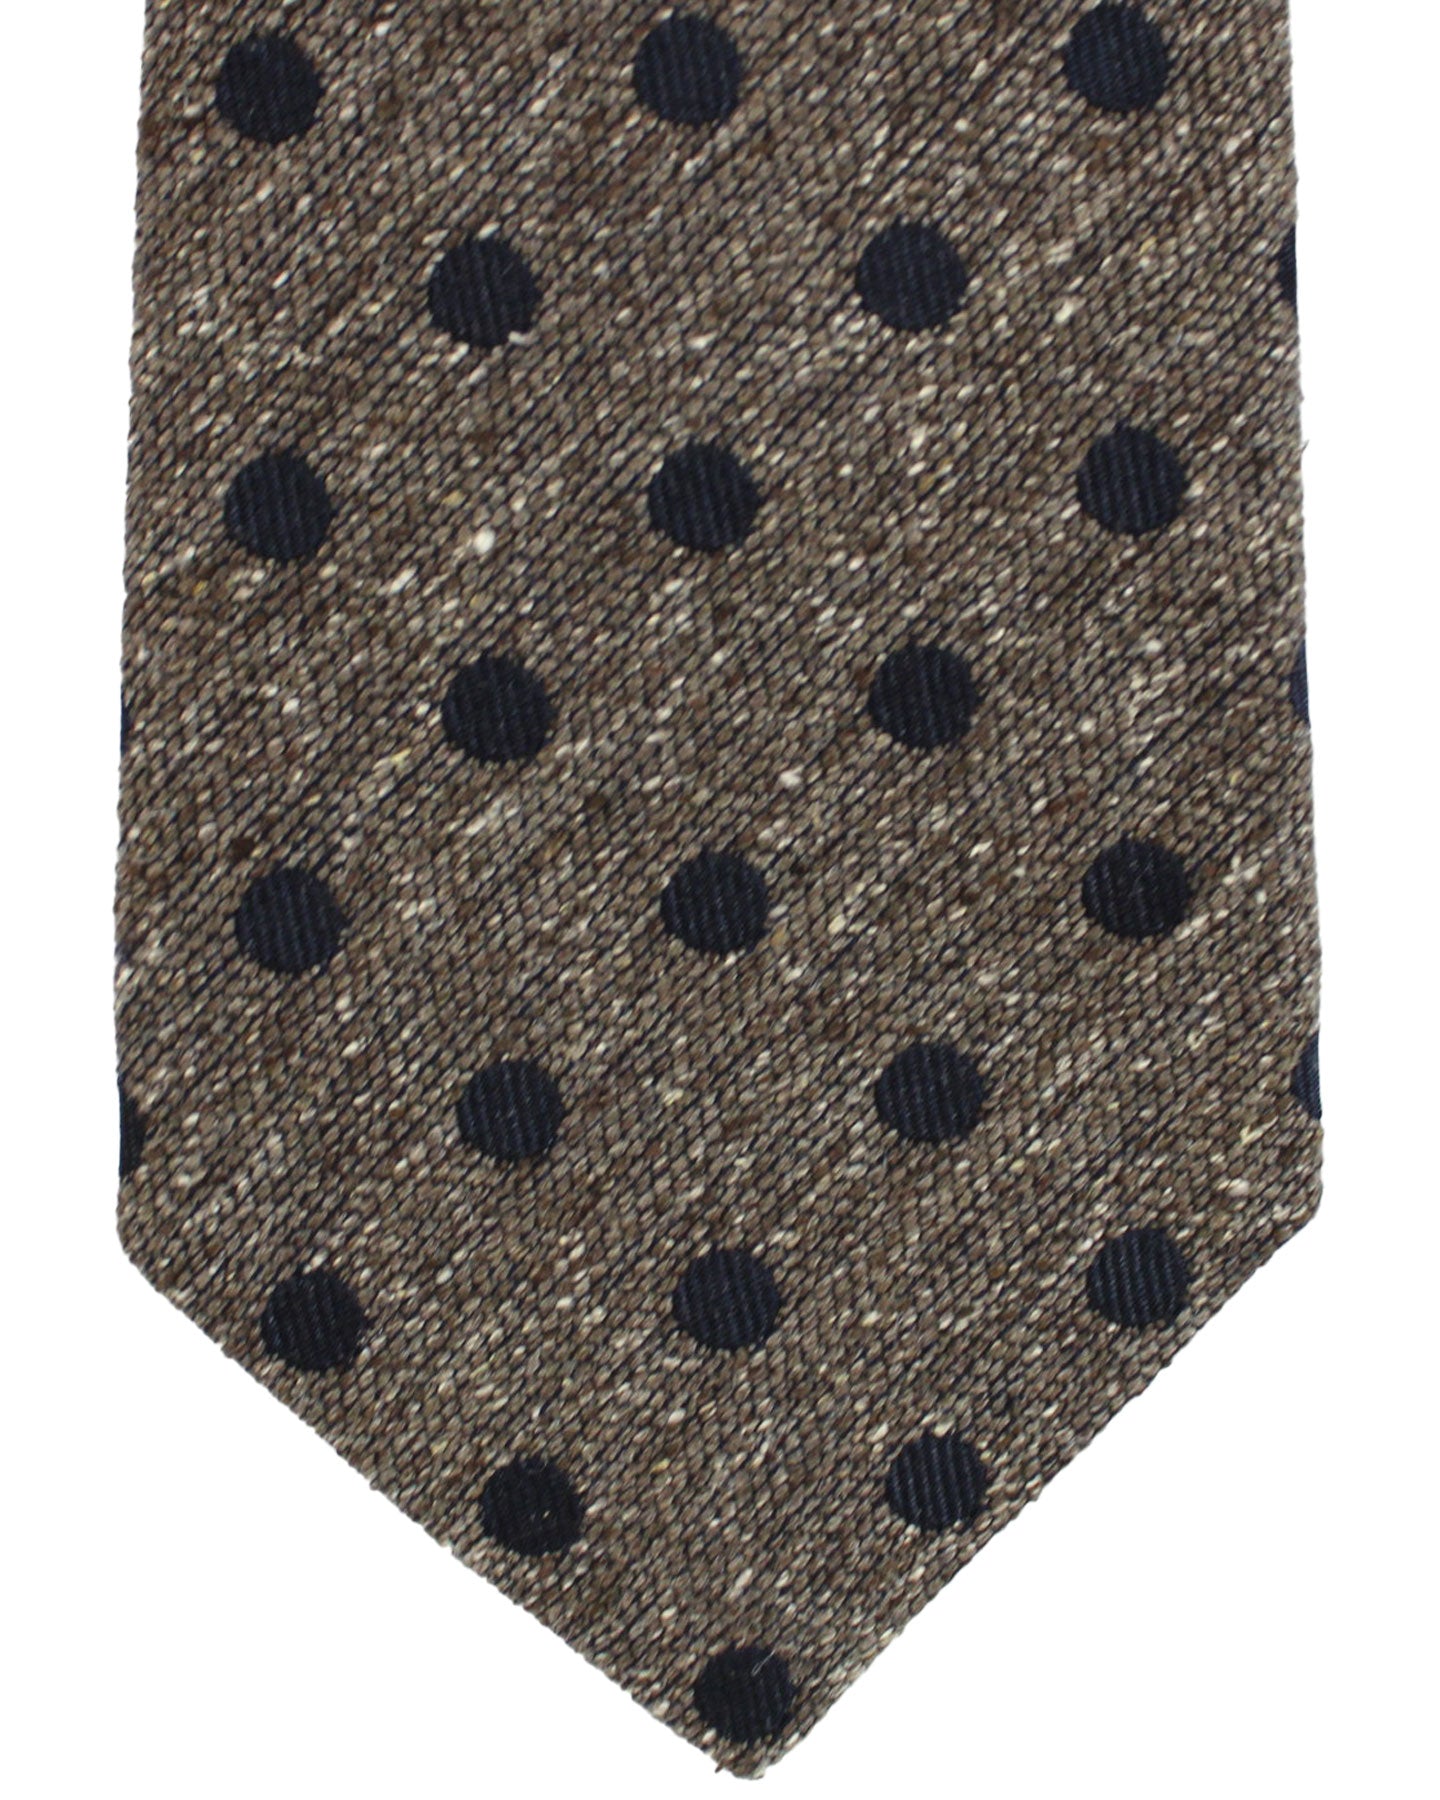 Kiton Silk Wool Tie Gray Taupe Polka Dots Design - Sevenfold Necktie